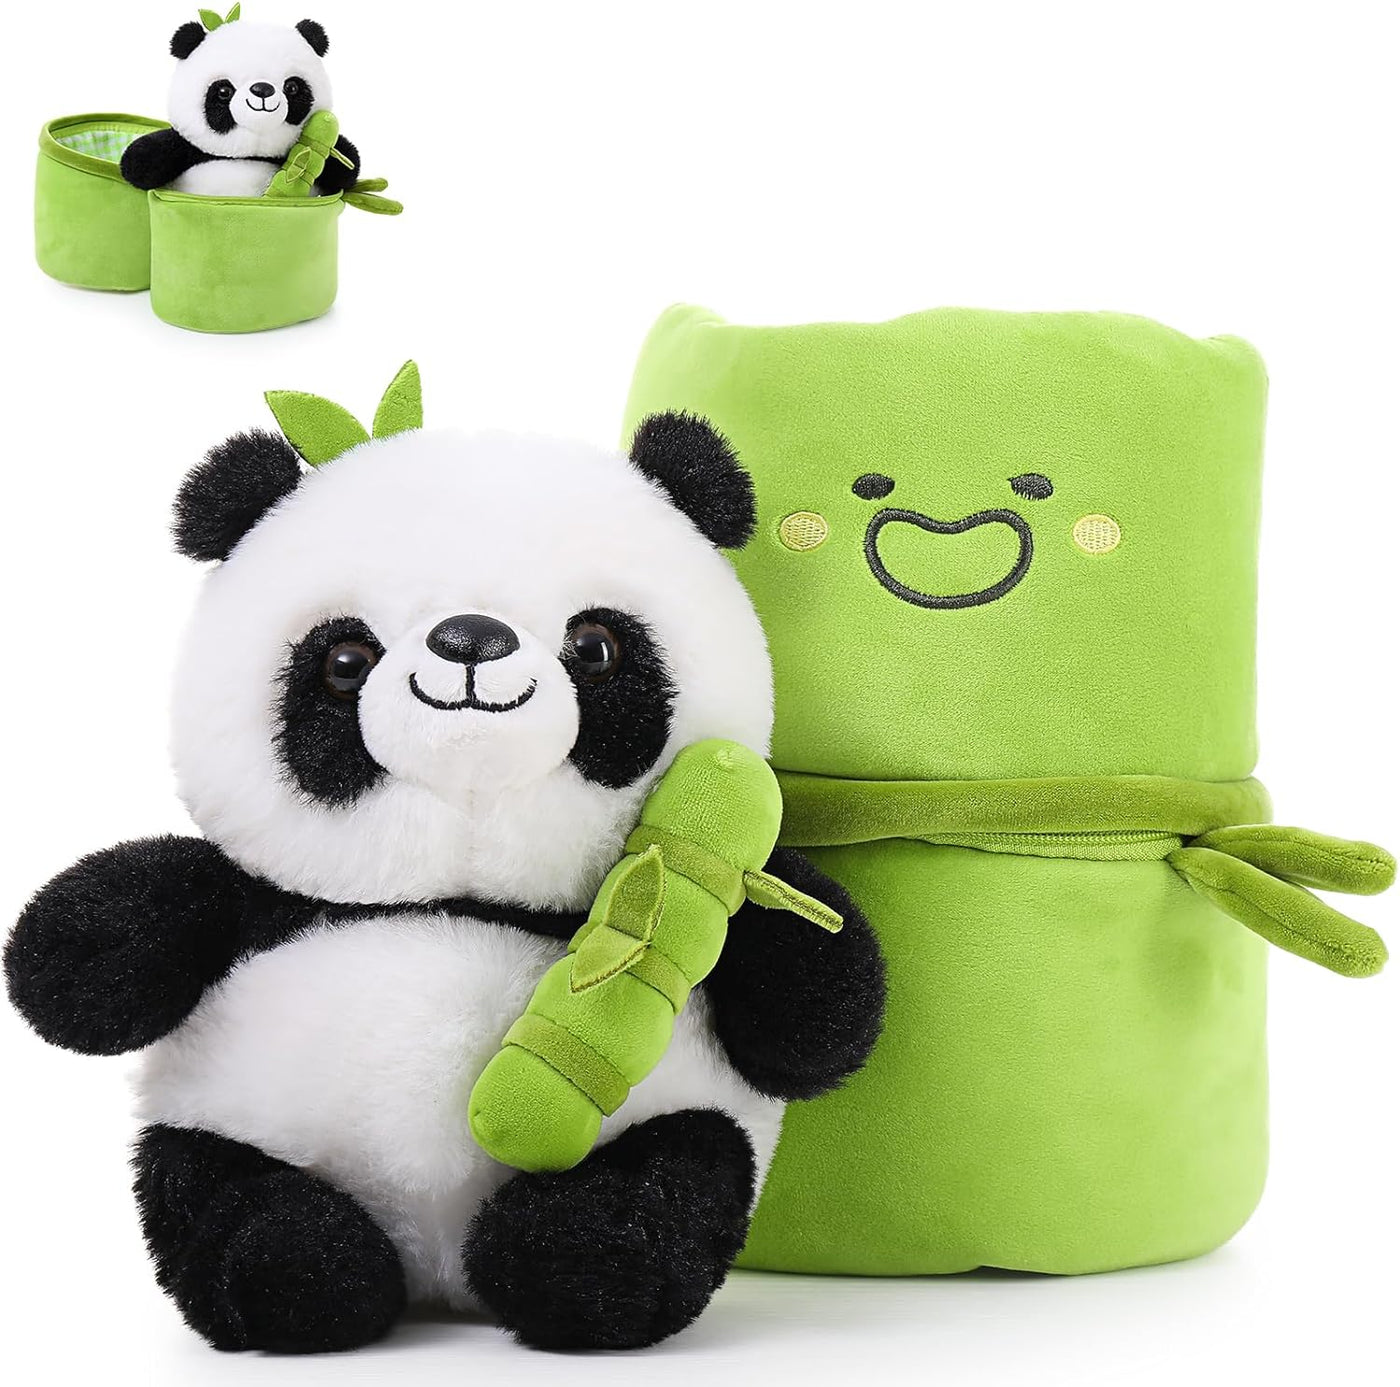 Panda Bamboo Plush Toy Set, 9.8 Inches - MorisMos Stuffed Animals